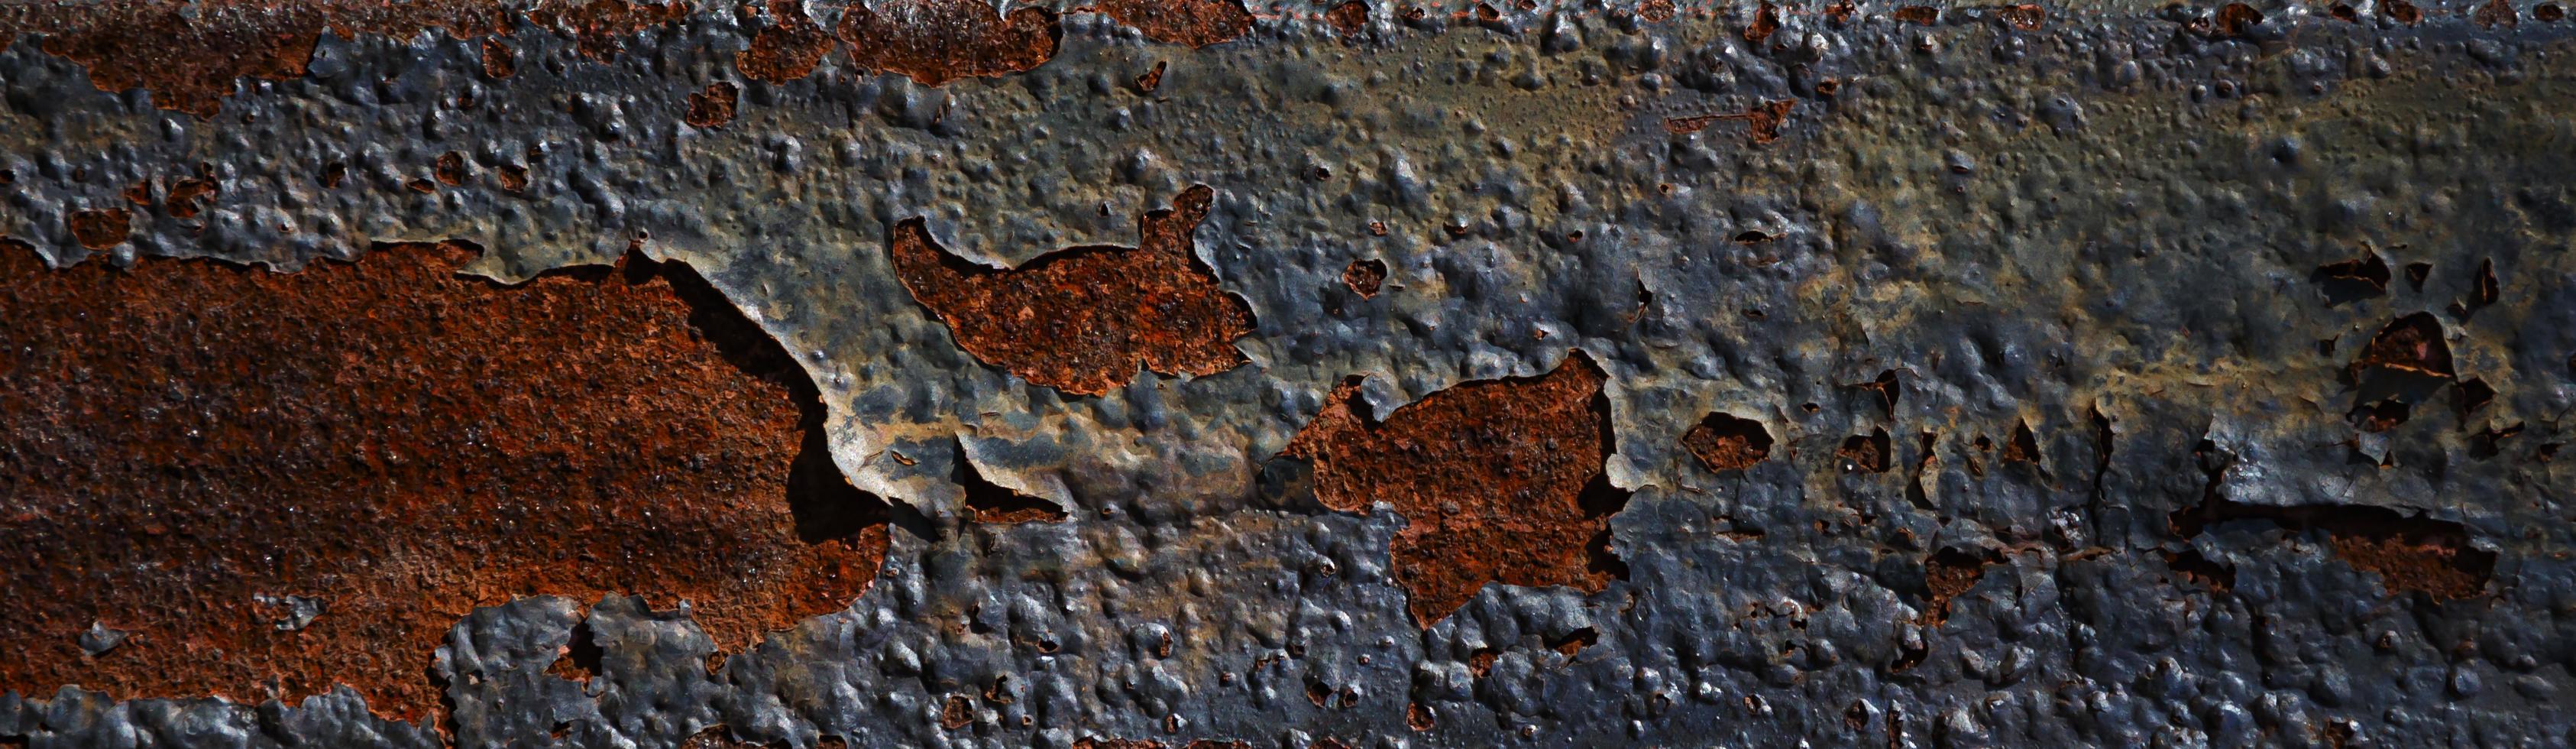 metall abstrakt konsistens. yta grunge bakgrund. smutsigt effektmönster. materiell bakgrund. foto